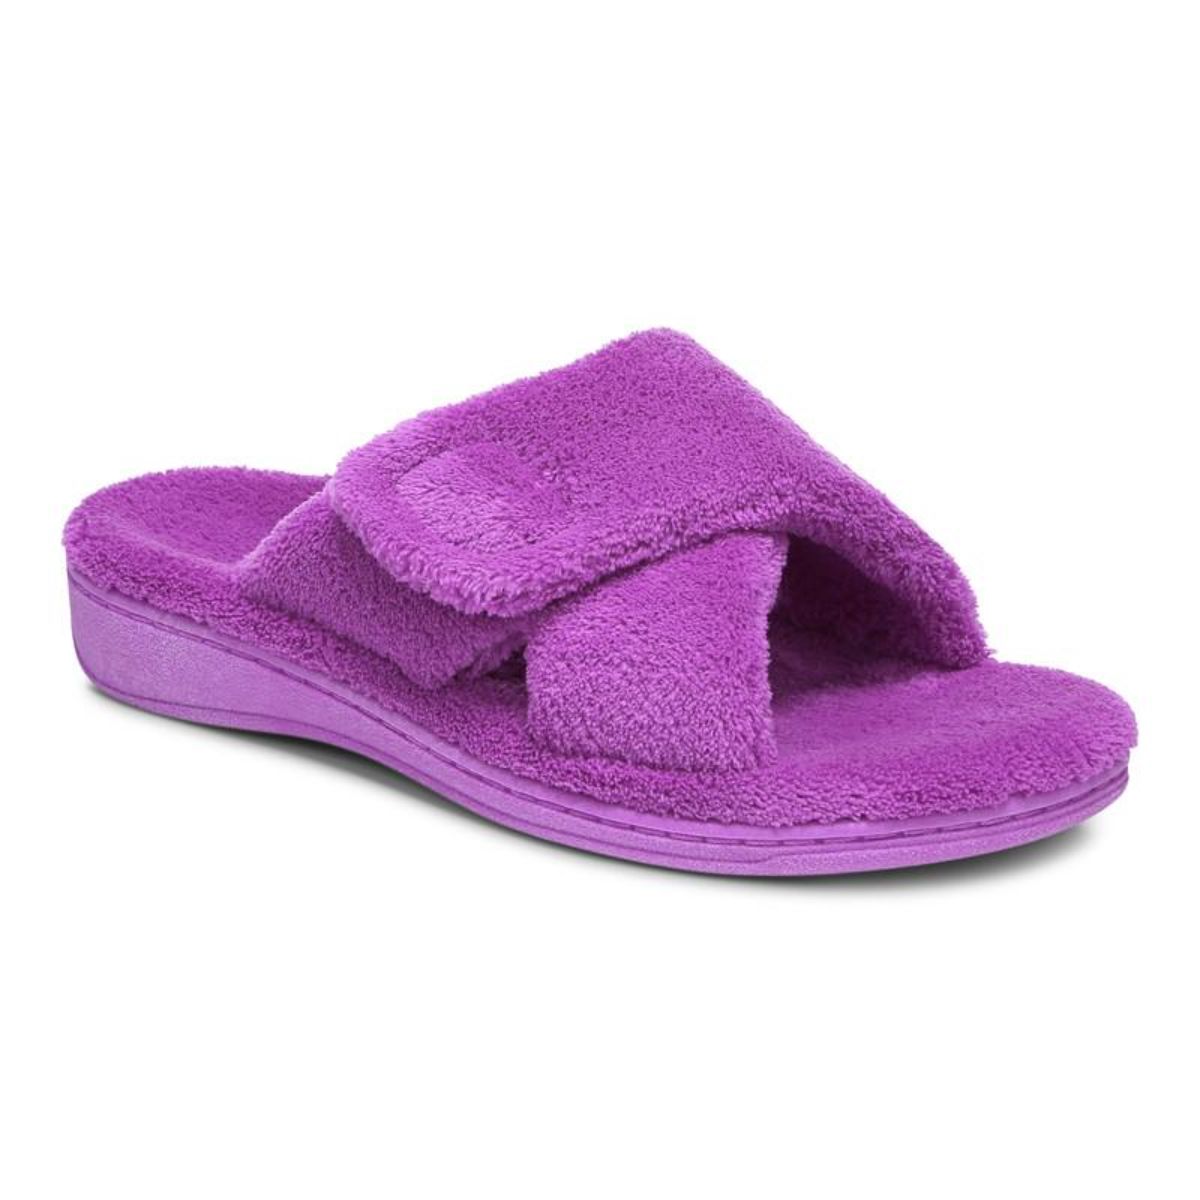 Vionic Women's Relax Slipper in Purple Cact Slippers VIONIC 11 